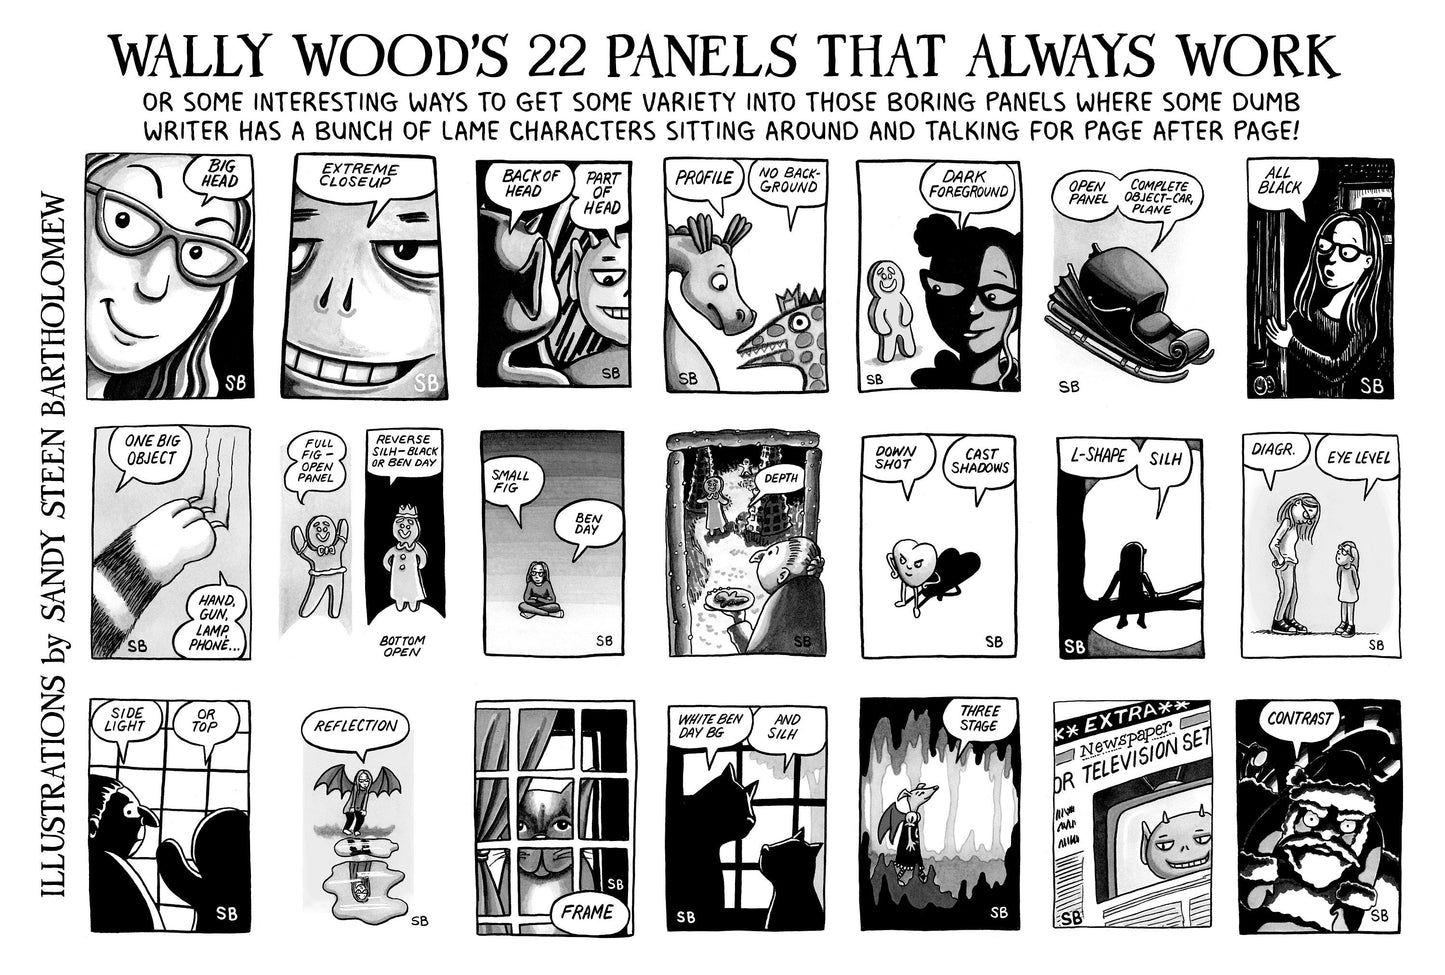 PDF - 22 Panels That Always Work - Printable Poster